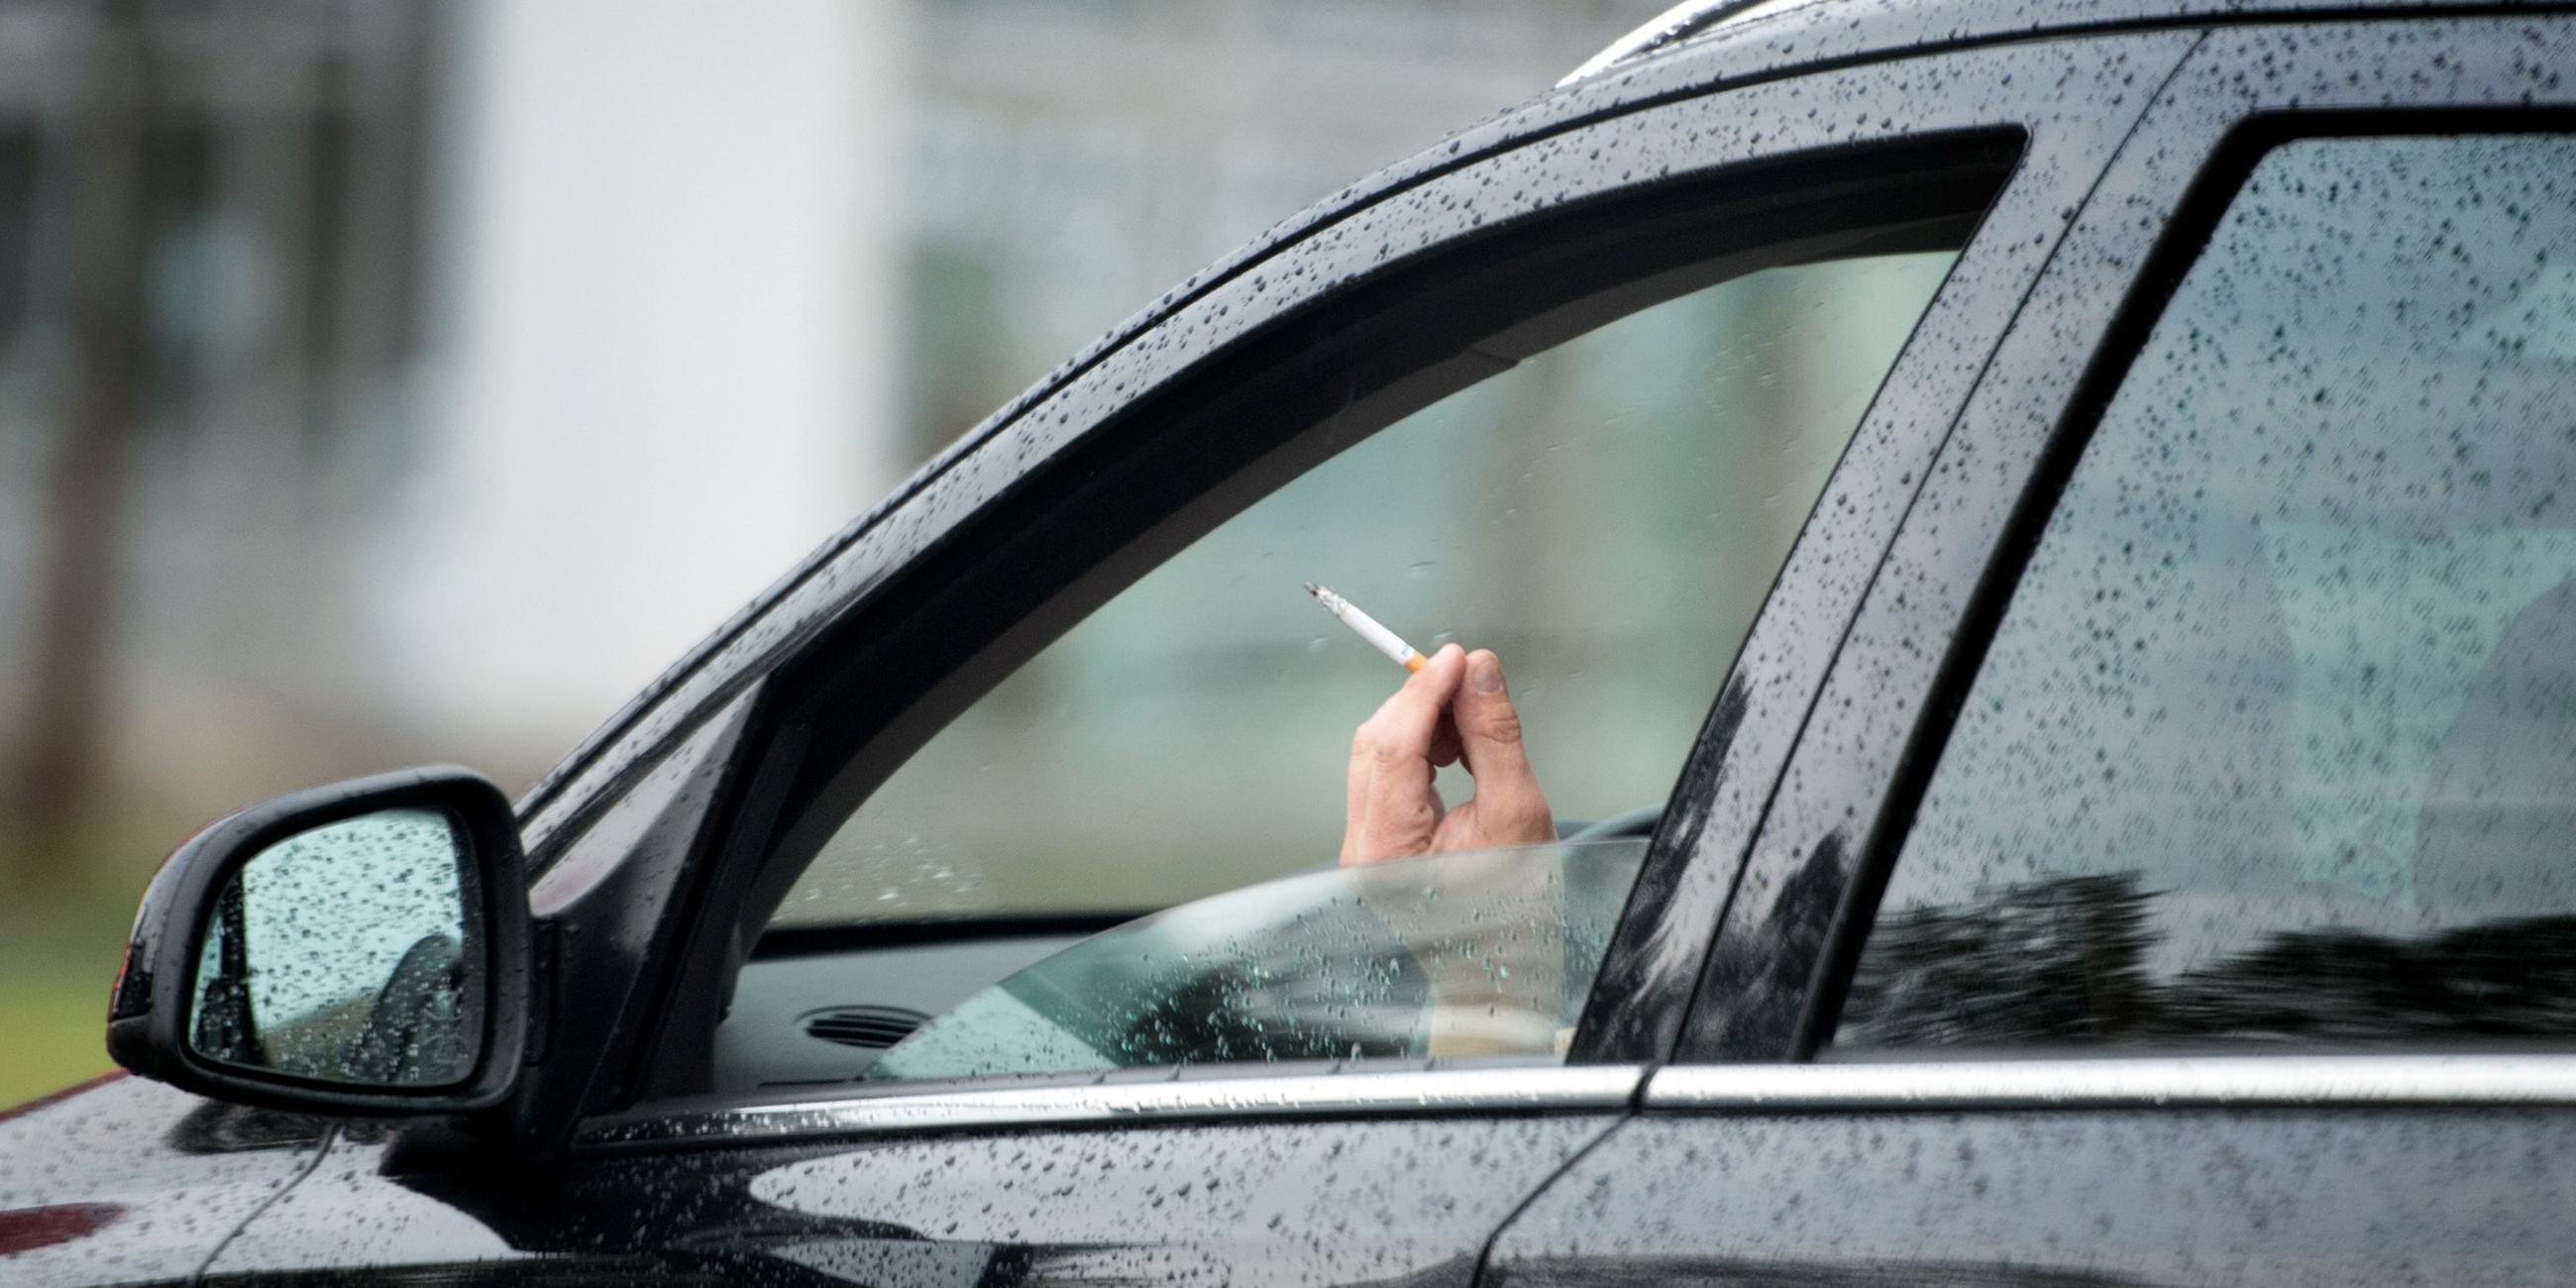 Rauchen im Auto. Symbolbild